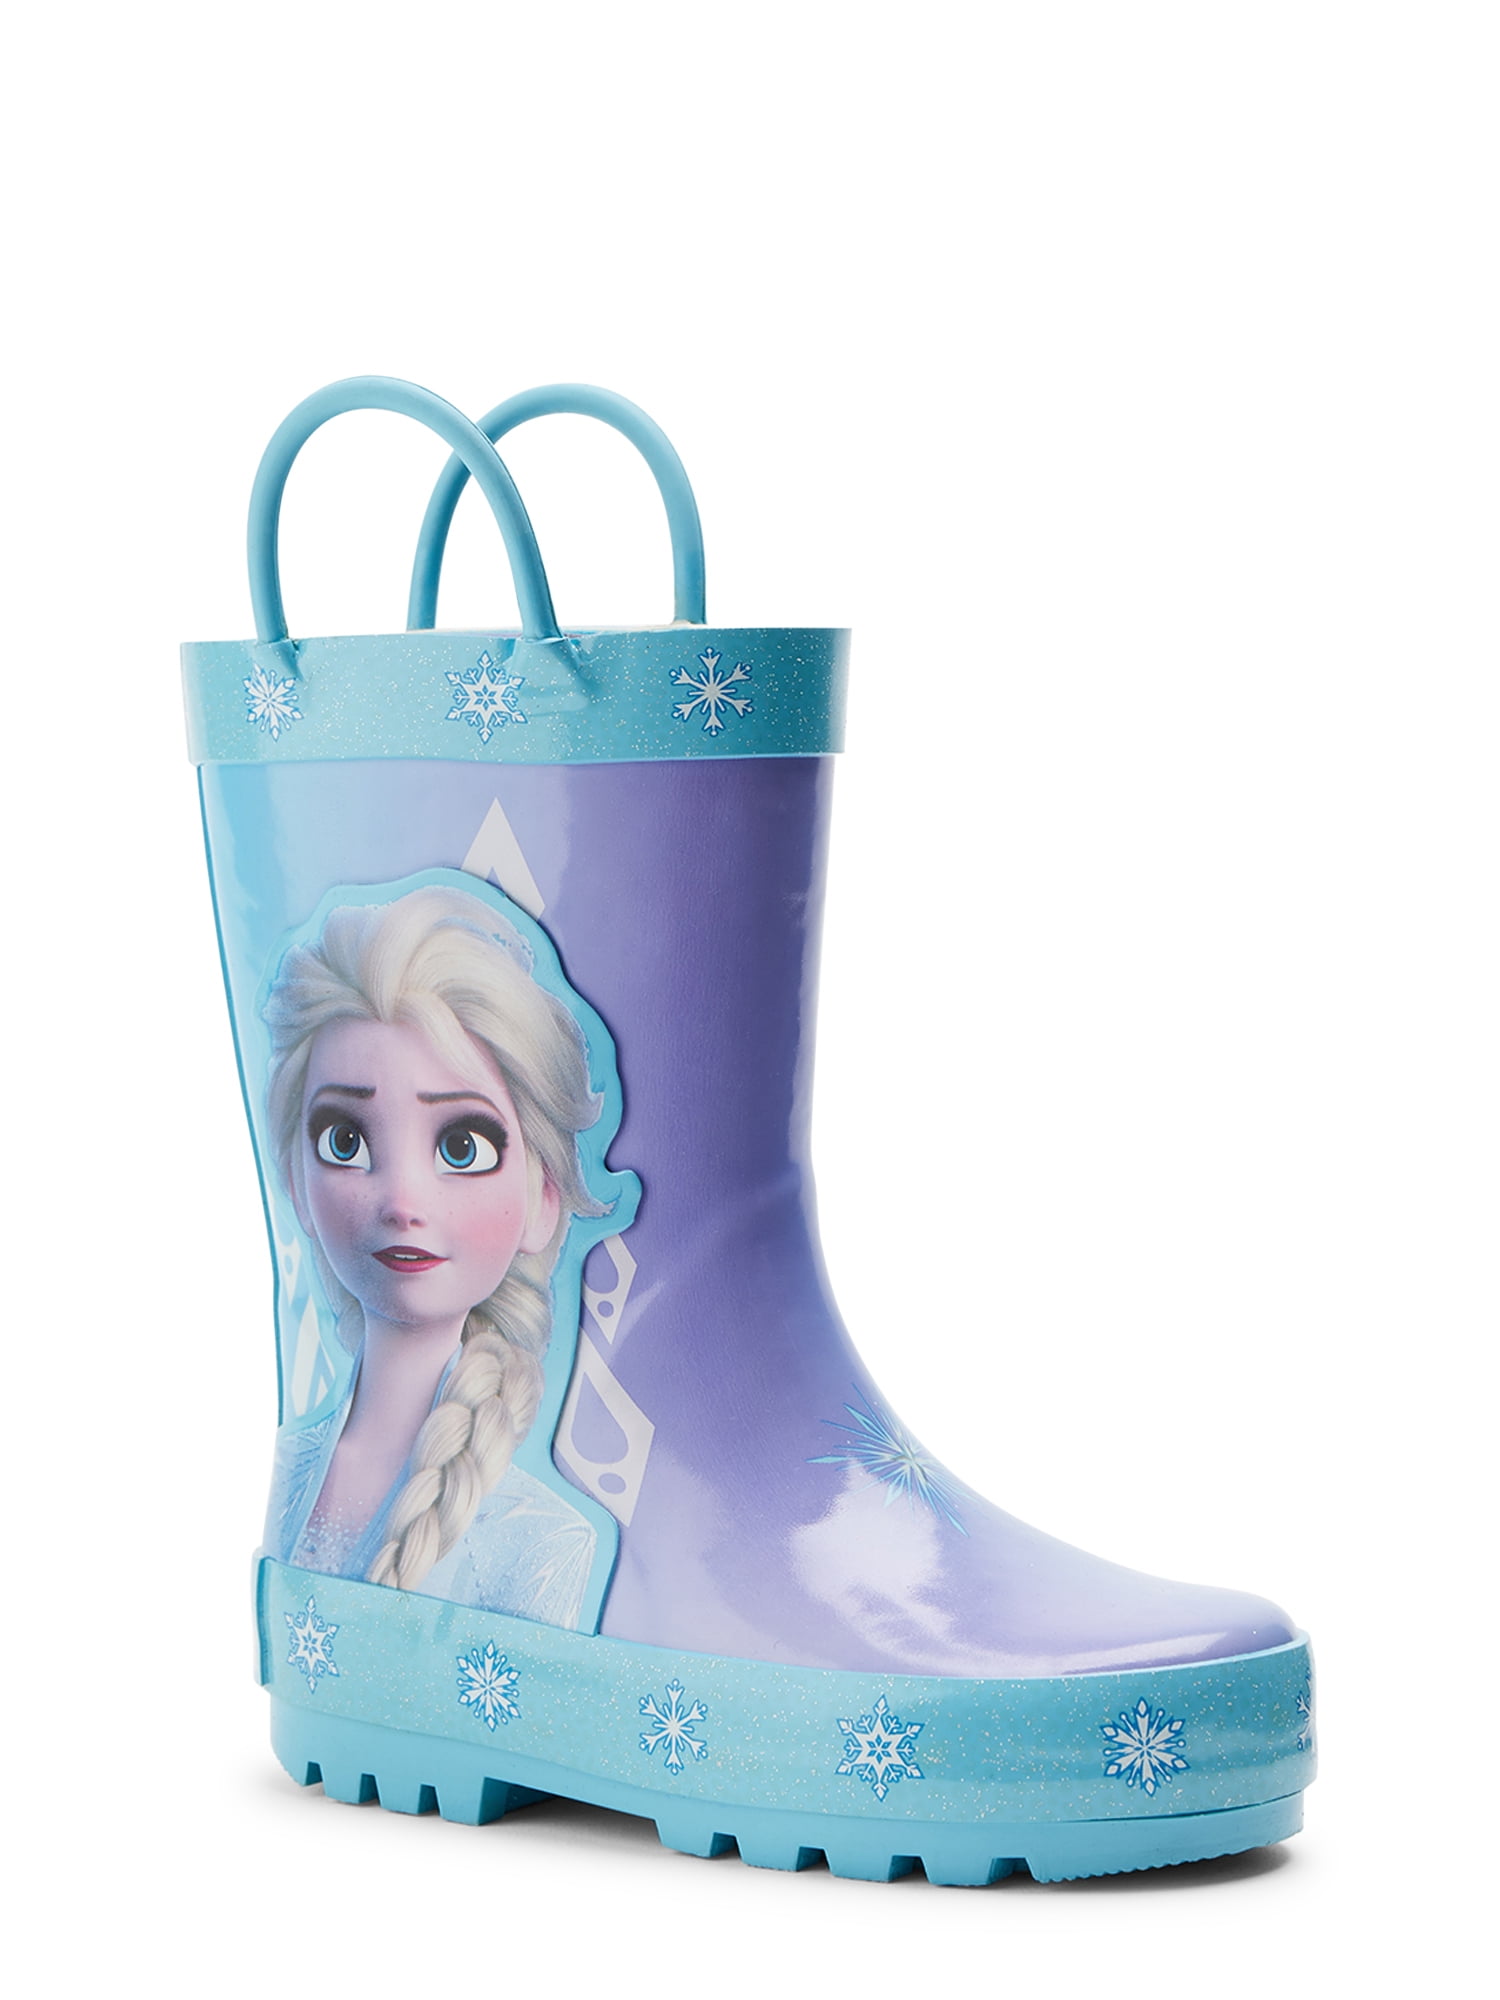 8,9,10 New Disney Frozen Girl Elsa Rain Boots Blue Toddler Size 7 Ship fast 